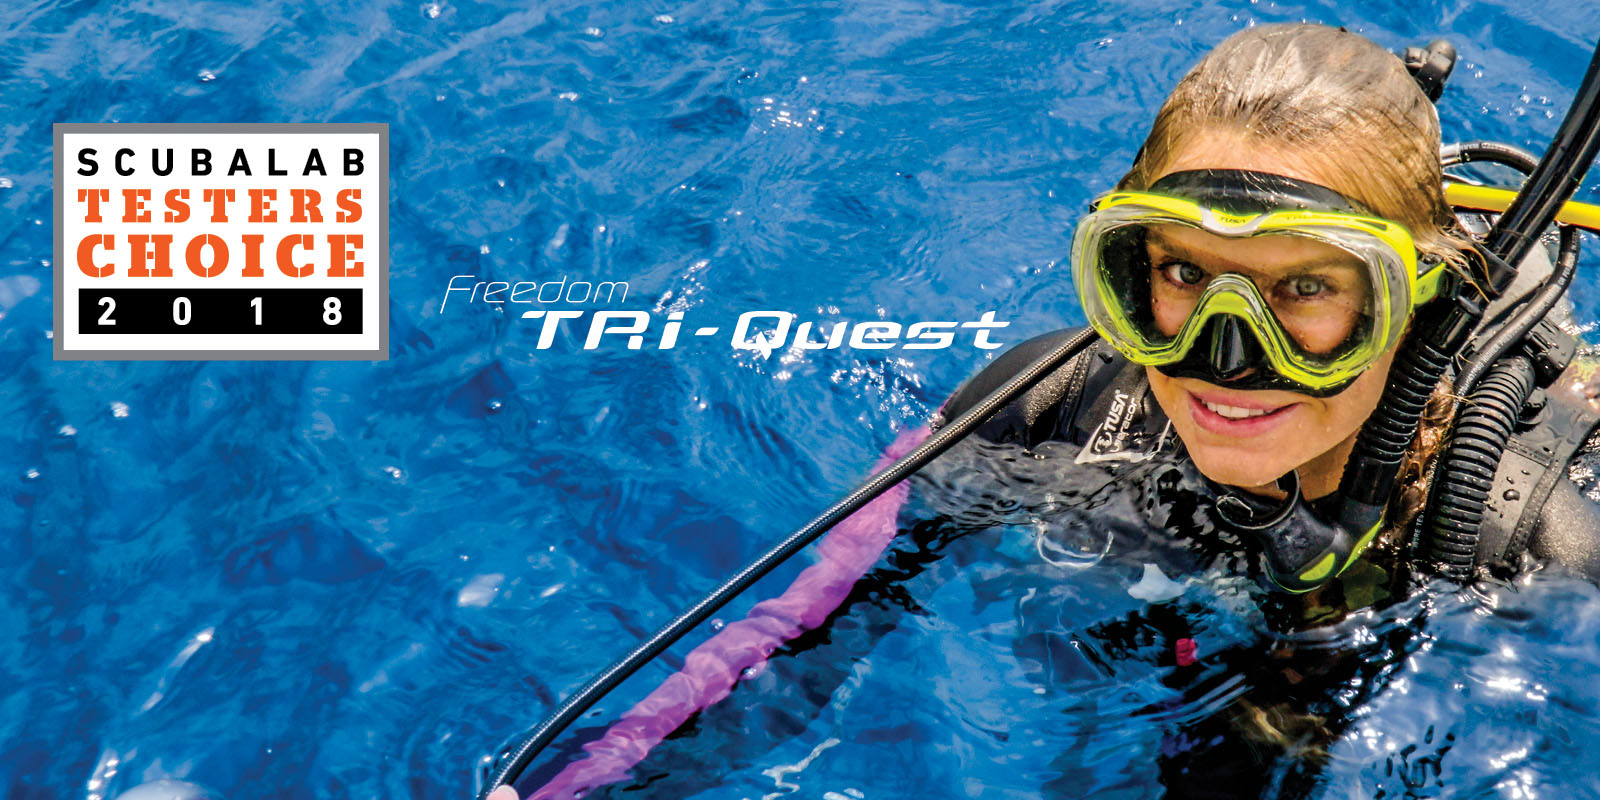 TUSA SF-170 semi dry snorkel scuba diving equipment New dredge gift gear fun 